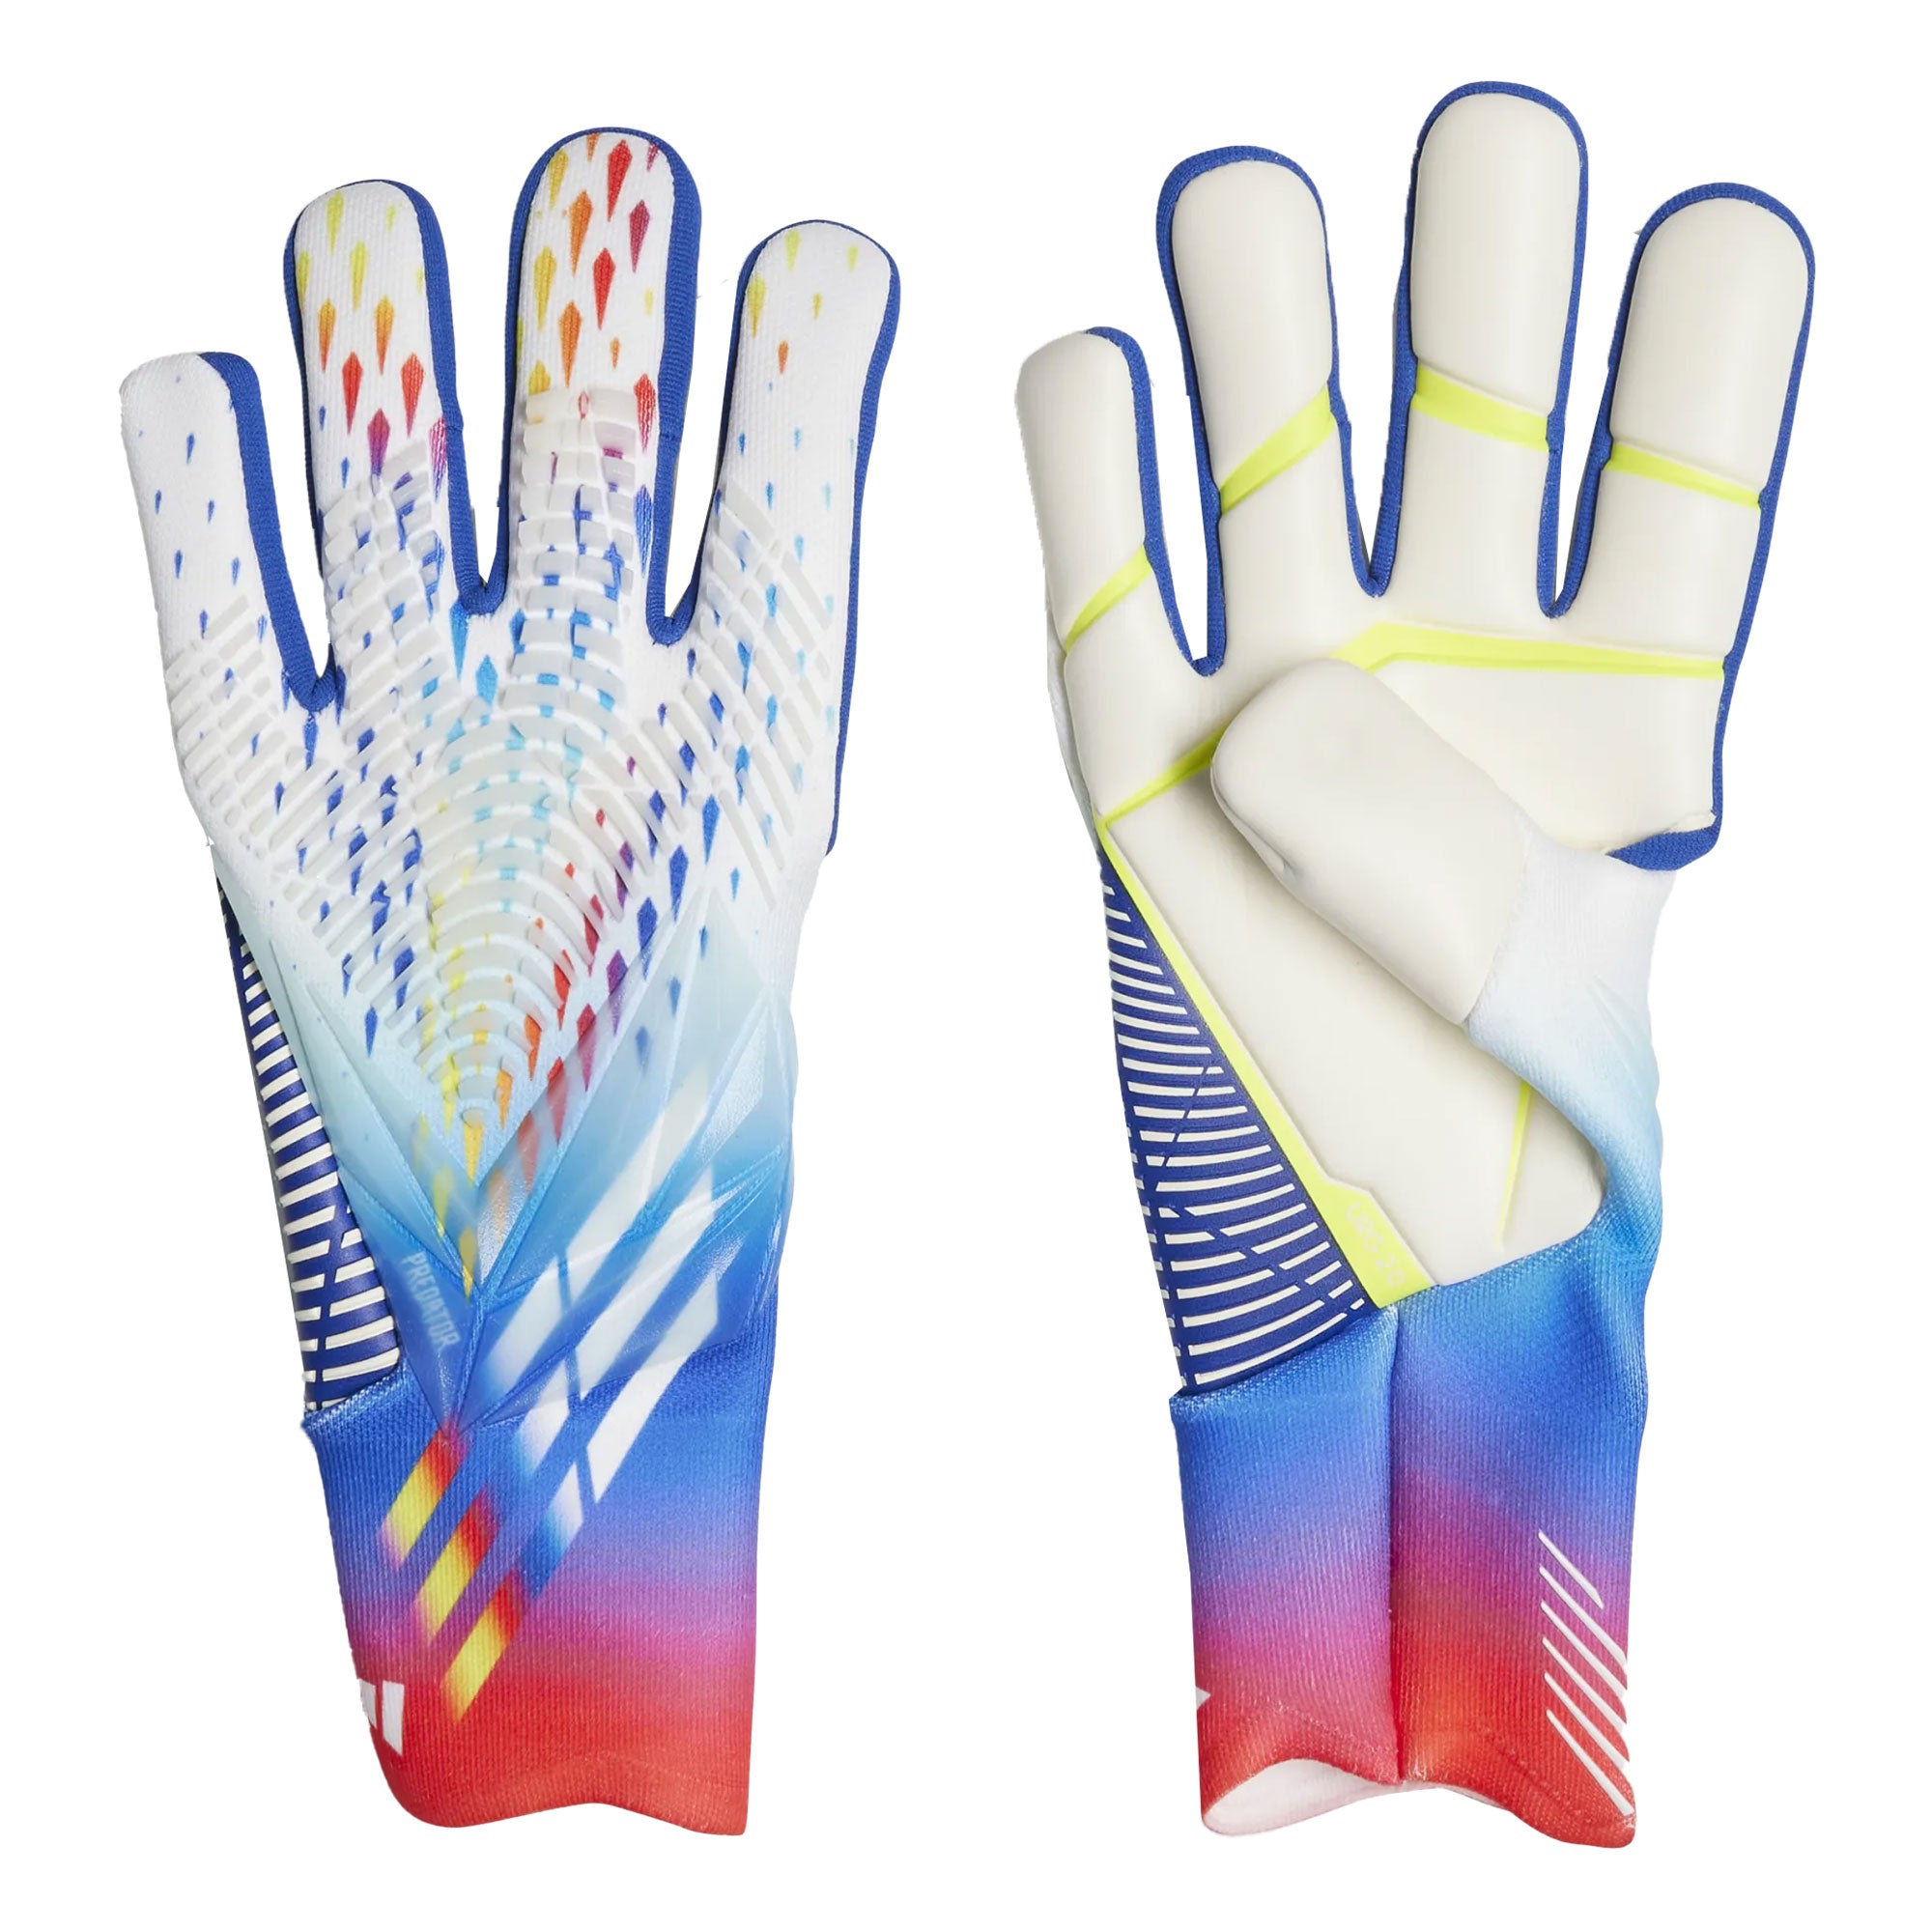 Adidas Predator Pro Goalkeeper Glove Review 